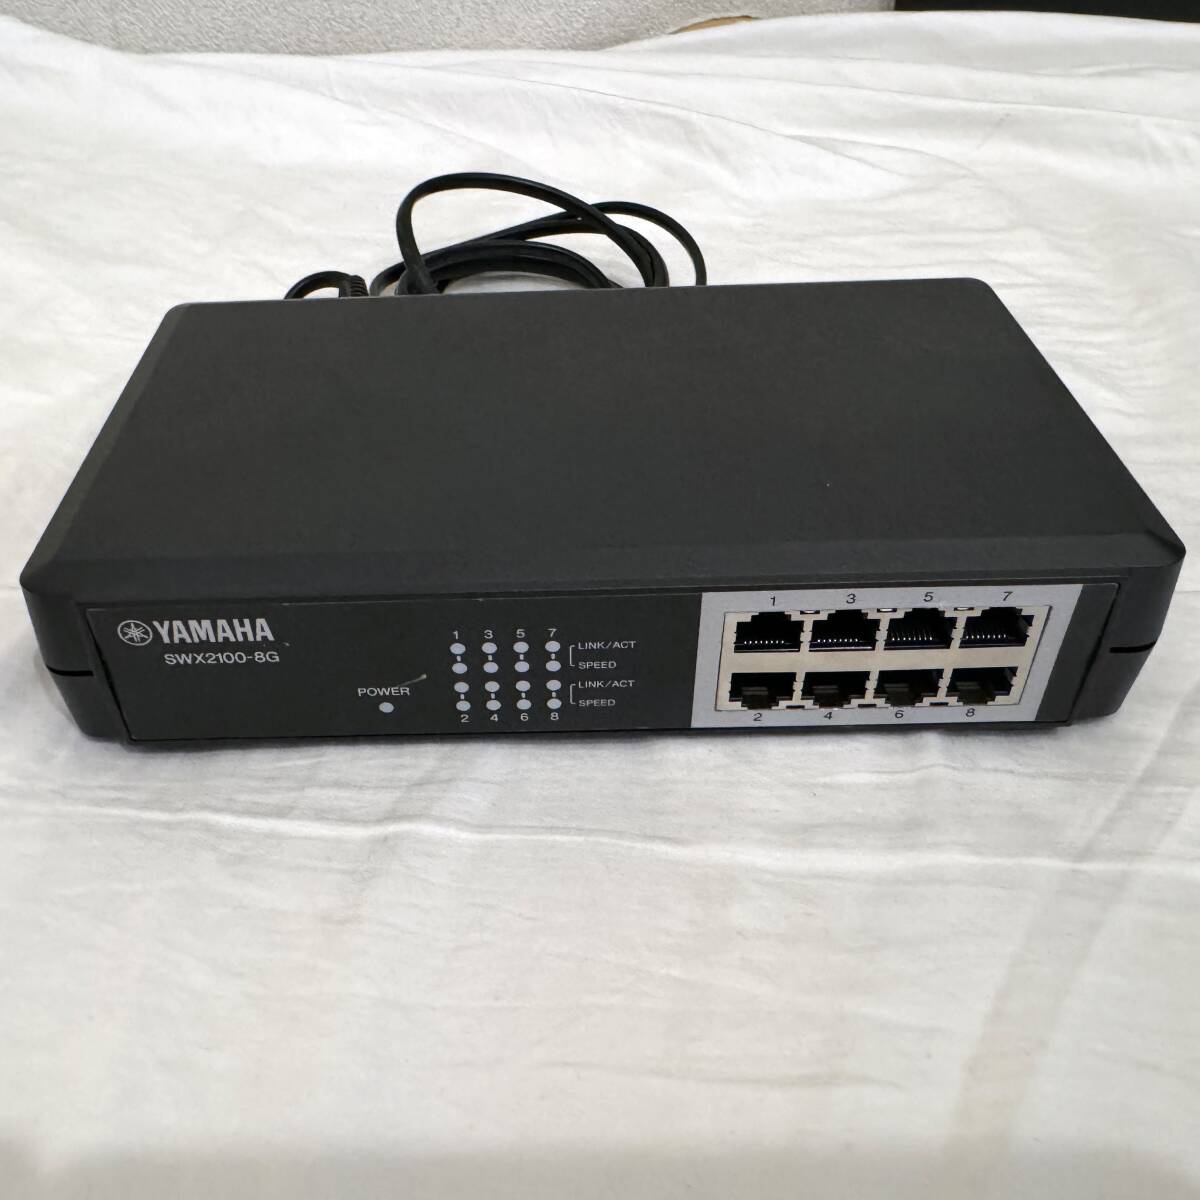  Yamaha YAMAHA simple L2 switch SWX2100-8G 8 port HUB #3